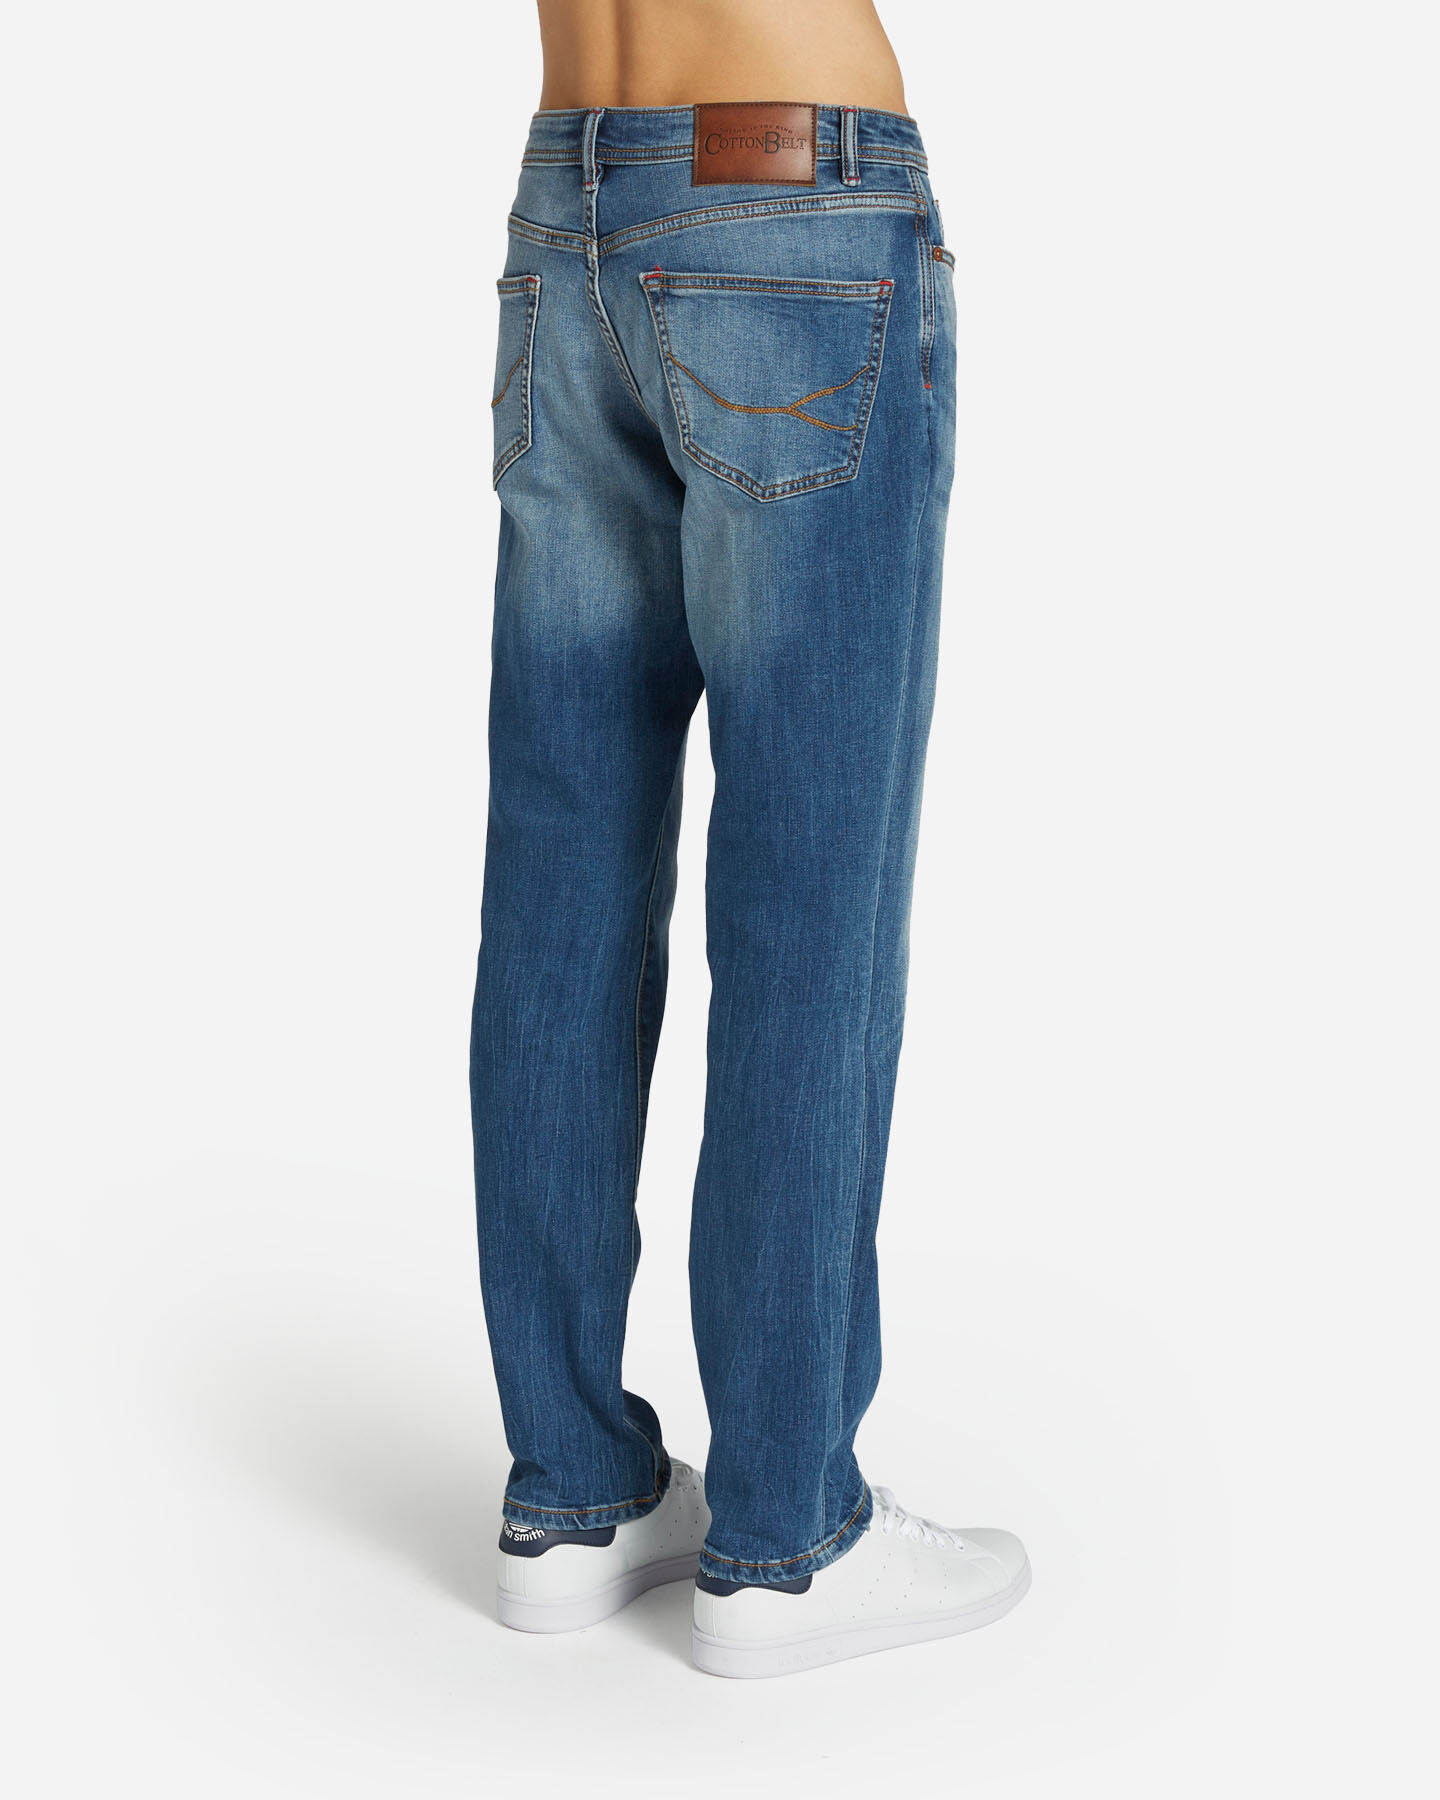  Jeans COTTON BELT 5 POCKET M S4126998|MD|30 scatto 1